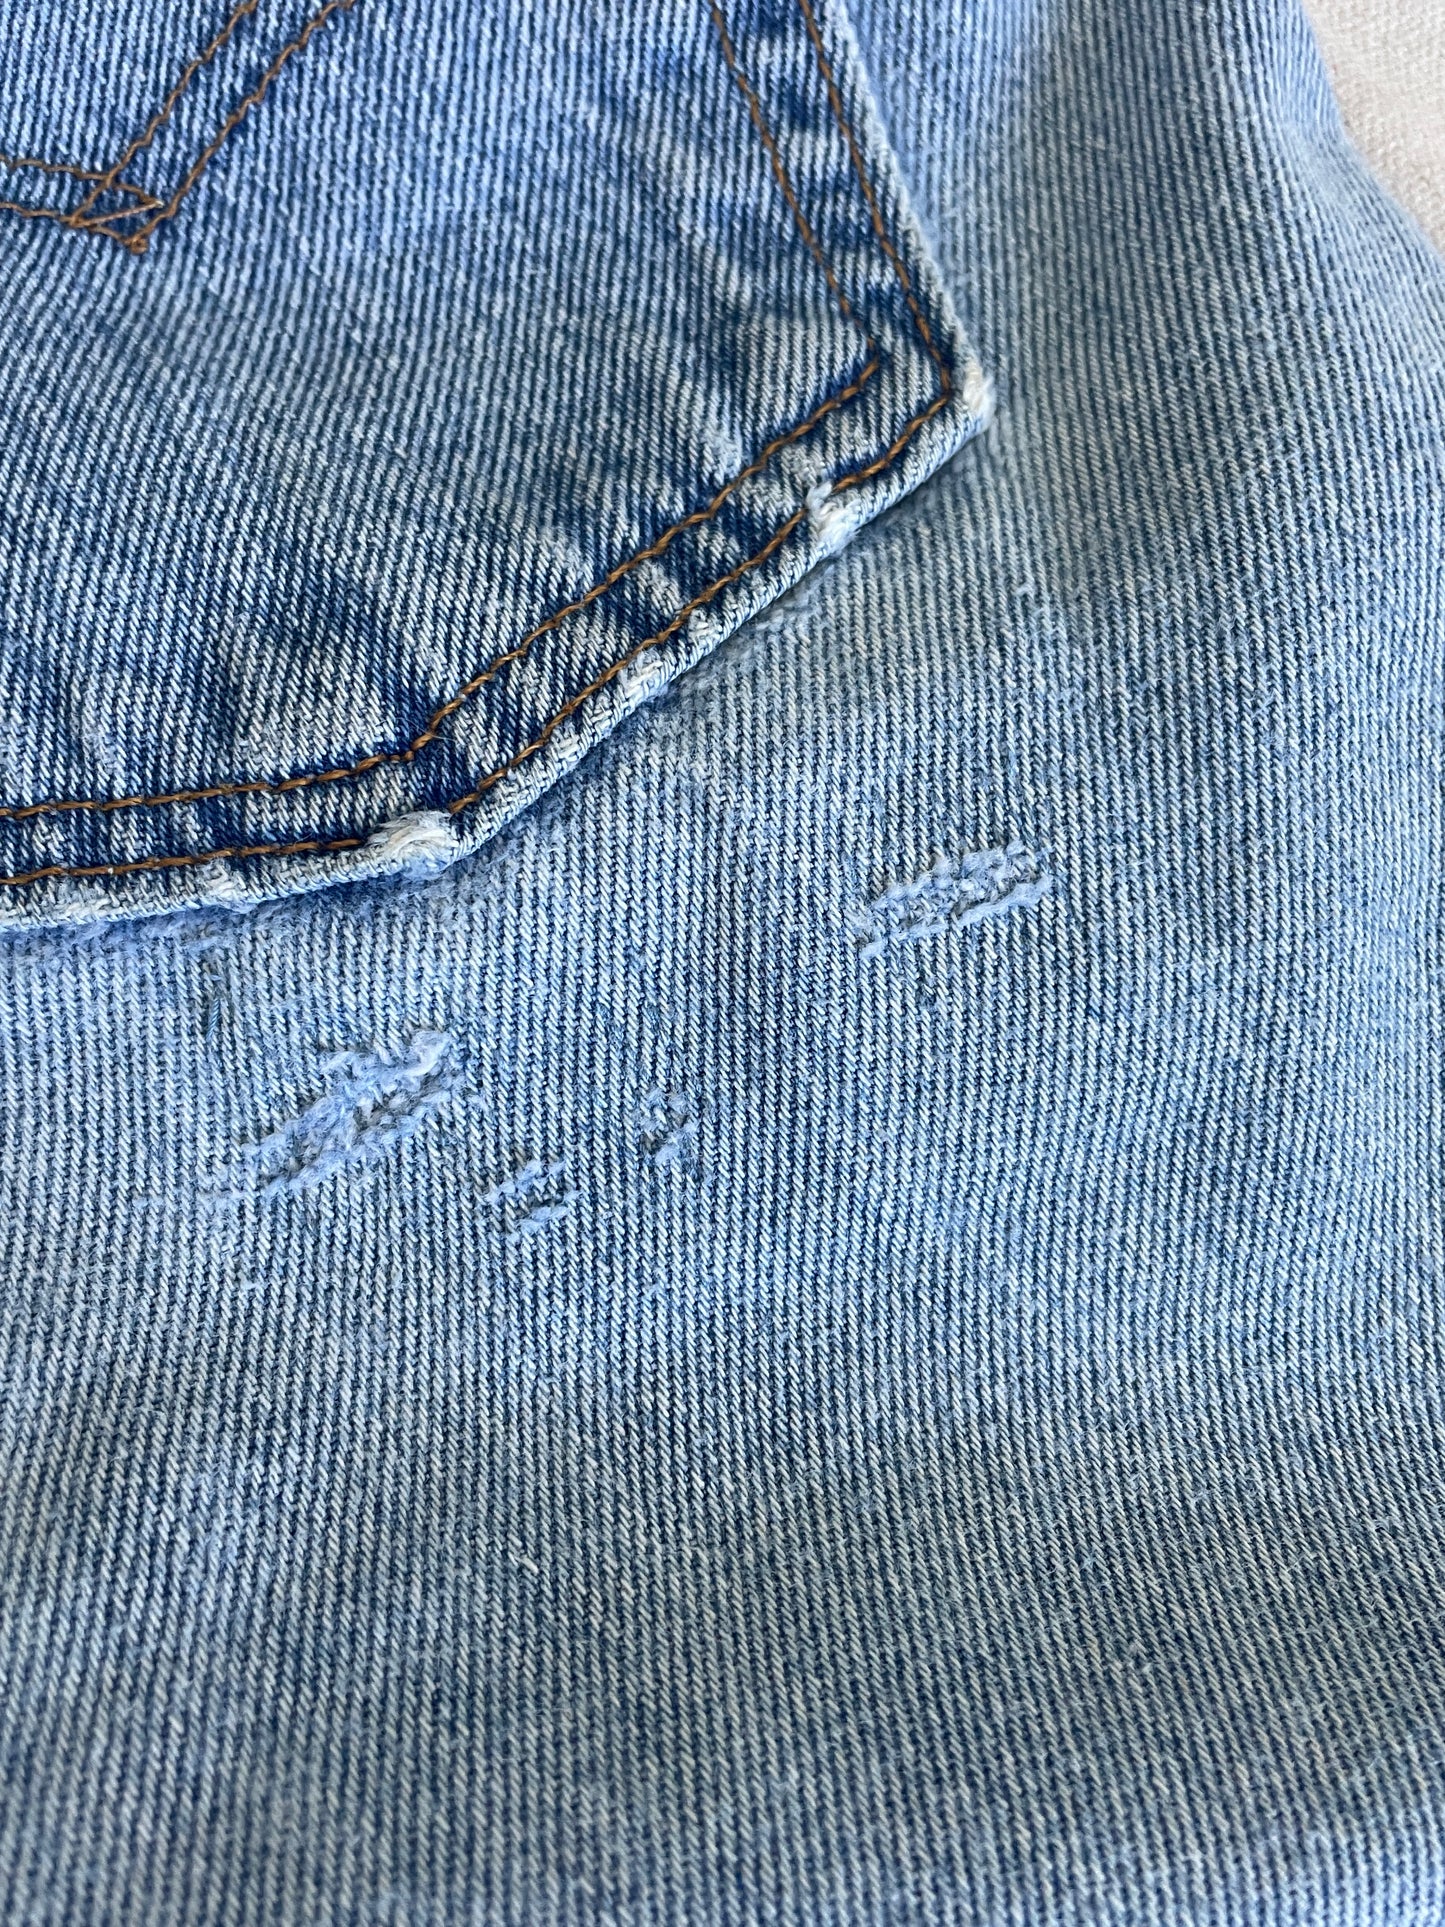 90s Levi’s 501s Jeans